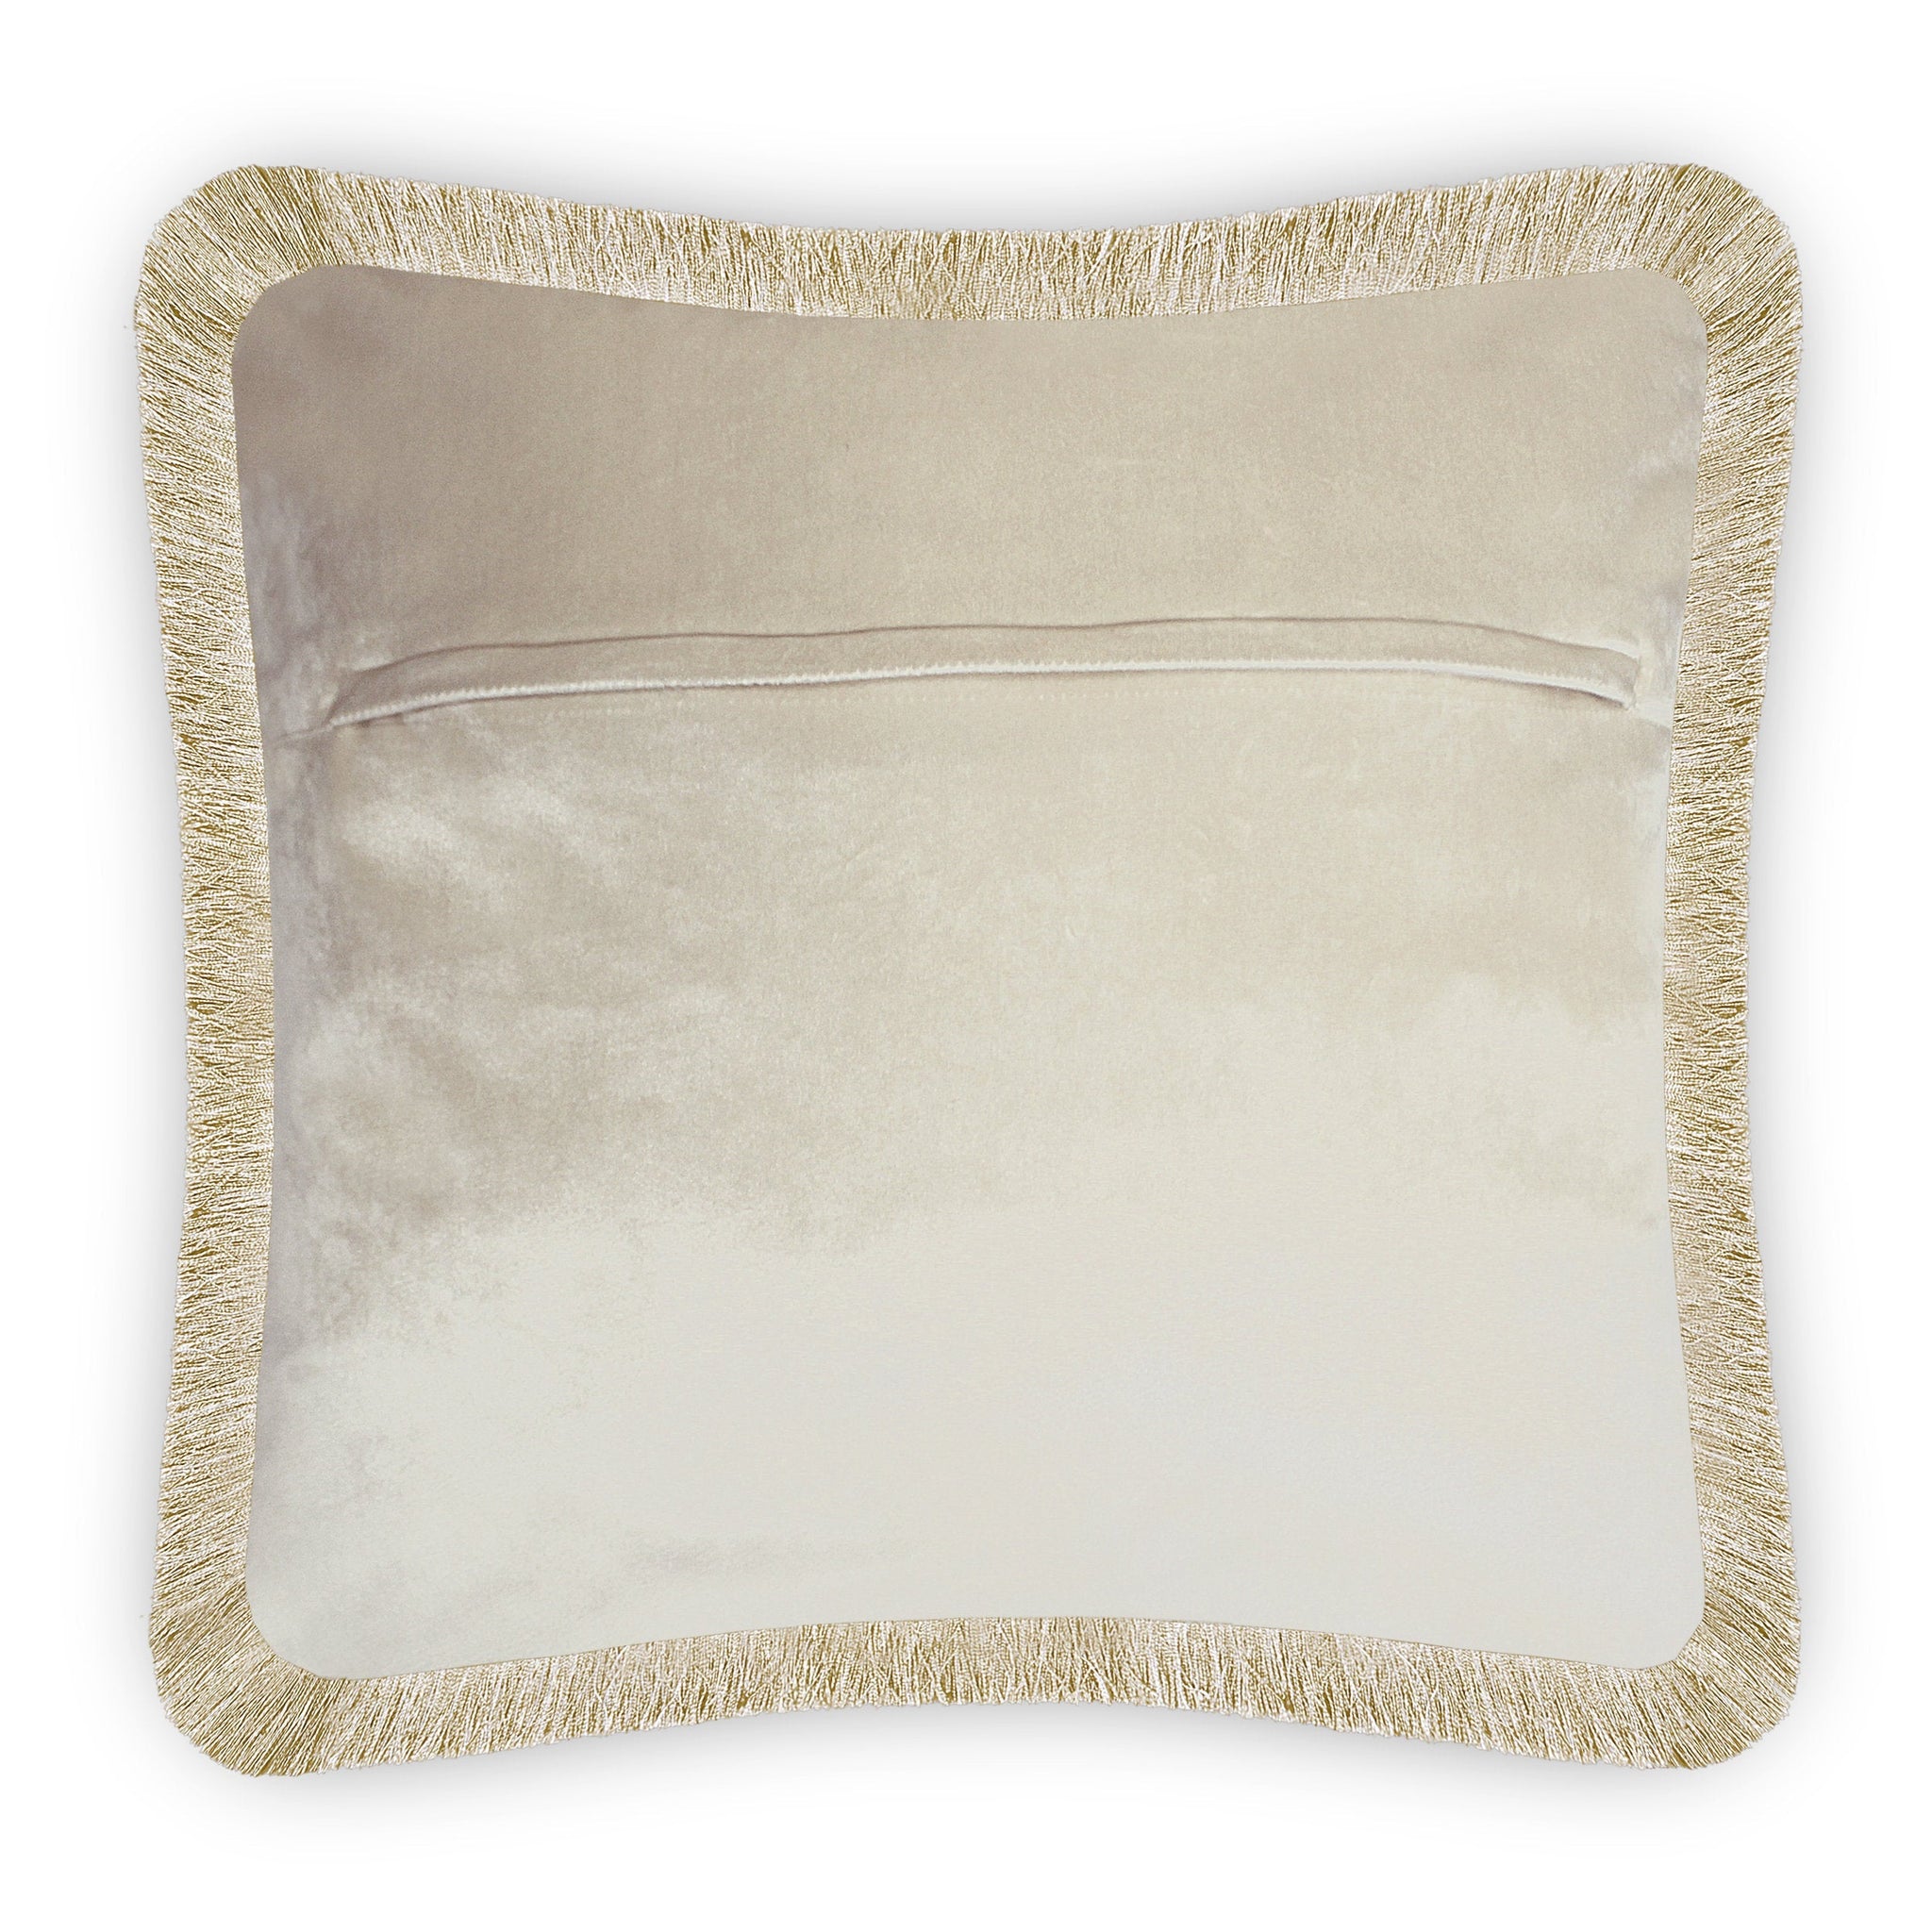 Beige Velvet Cushion Cover Ottoman Floral Decorative Pillowcase Home Decor Throw Pillow for Sofa Chair Living Room 45x45 cm 18x18 In